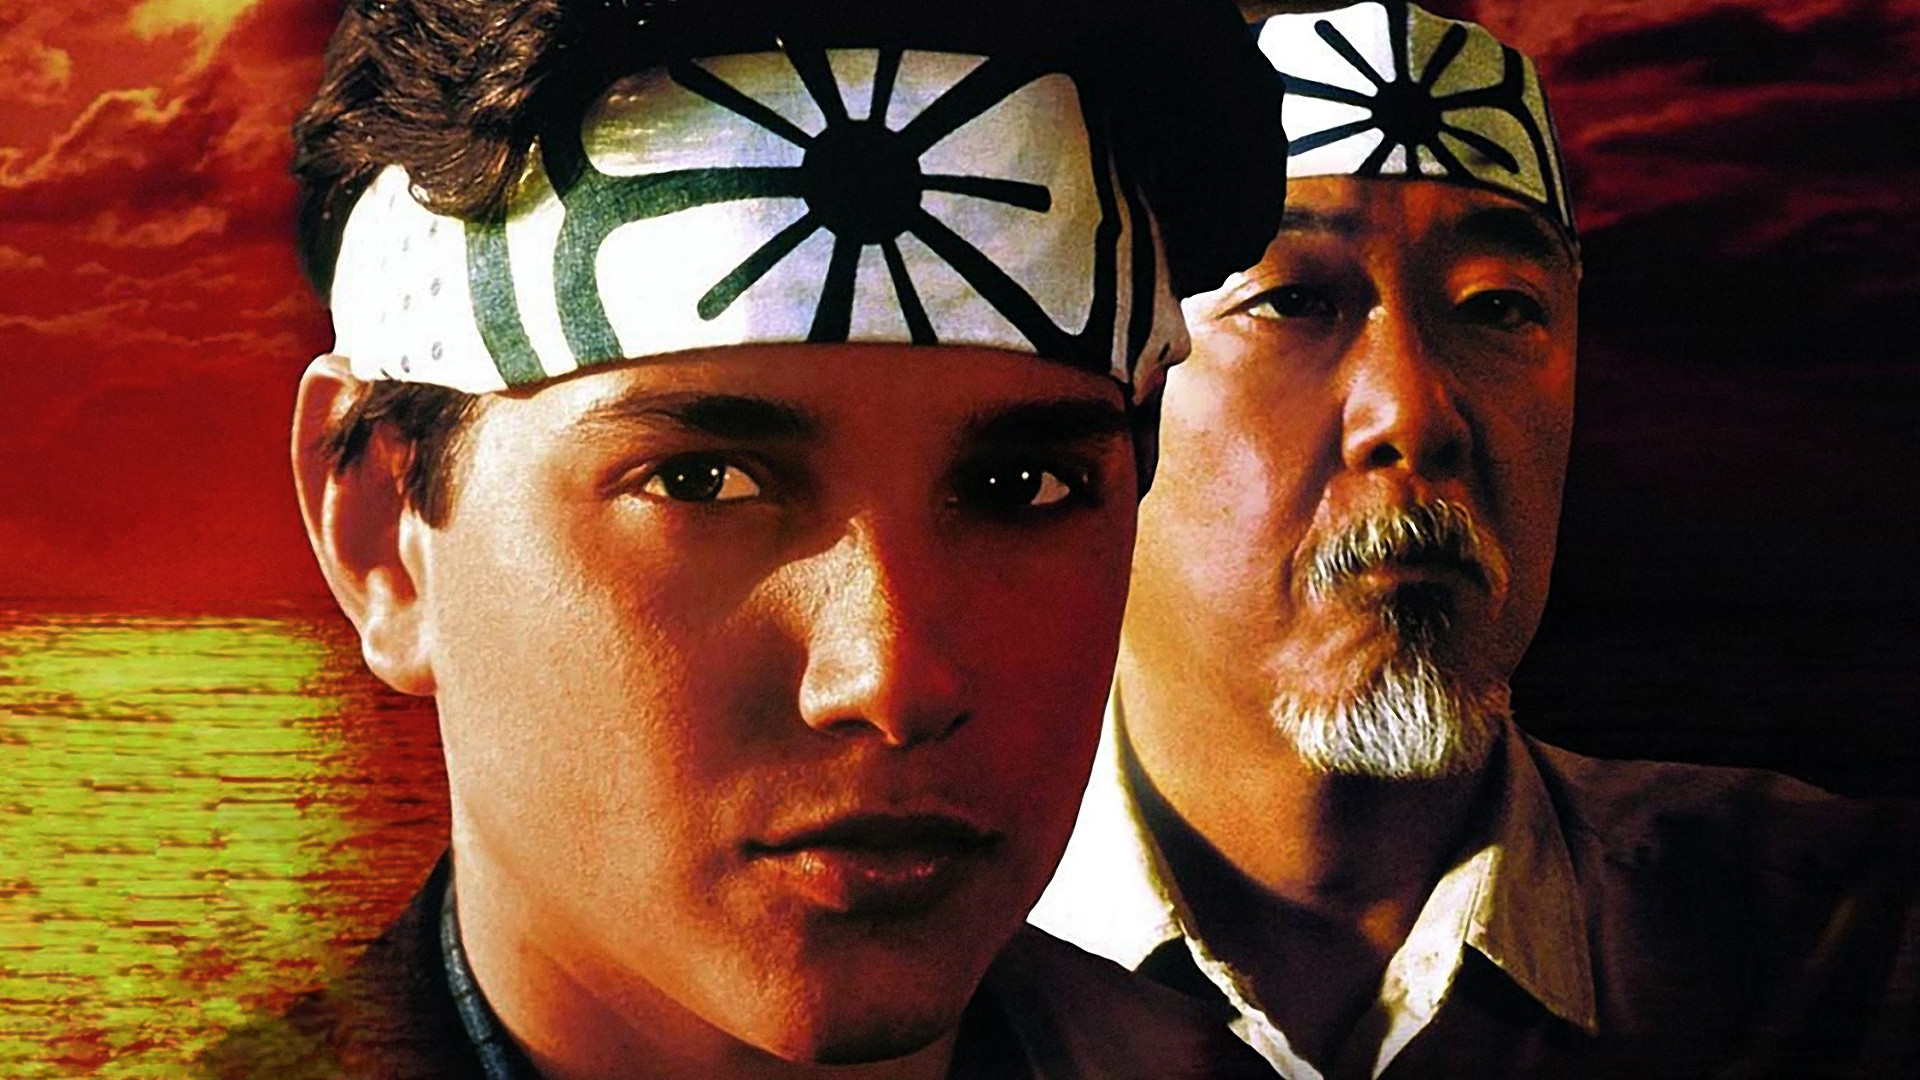 4k The Karate Kid (1984) Photos